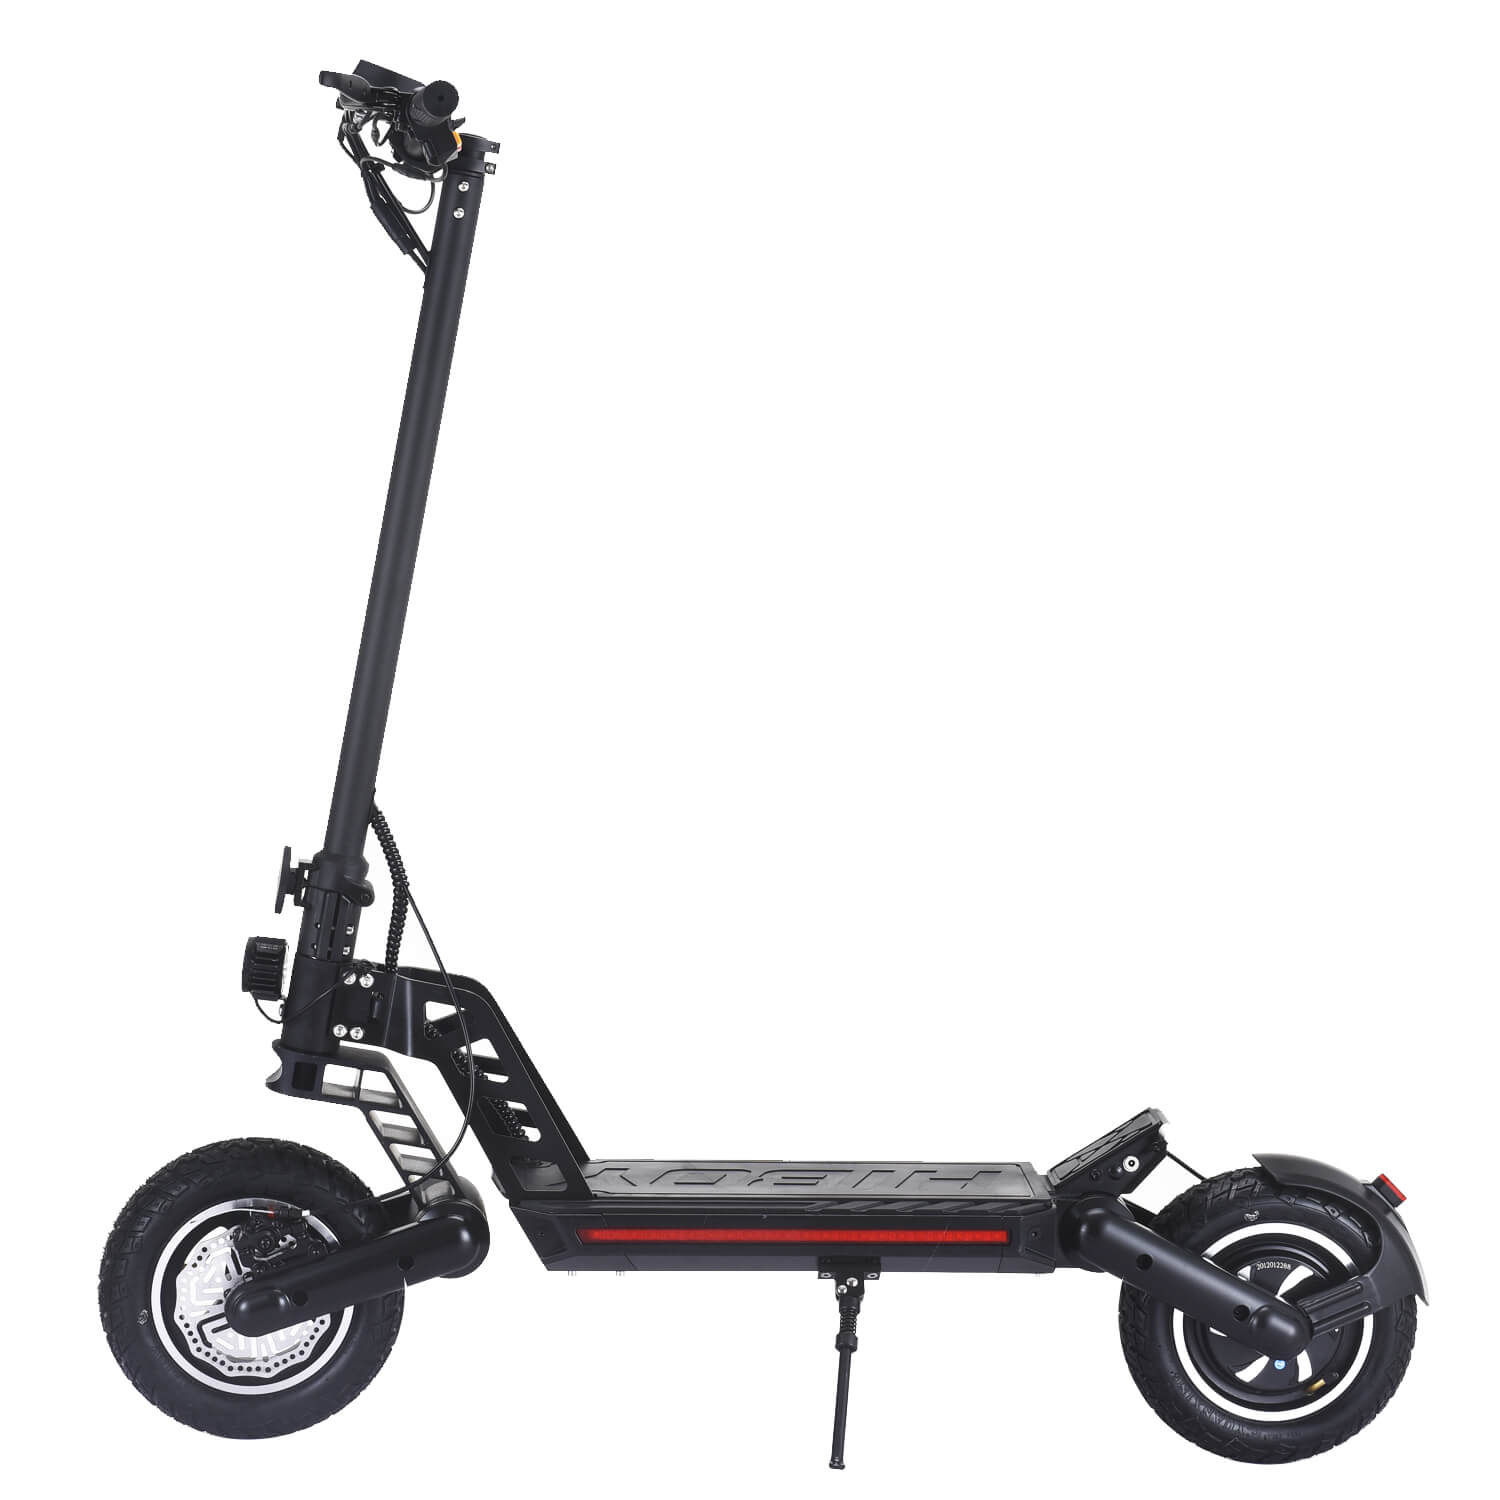 Hiboy Titan electric scooter